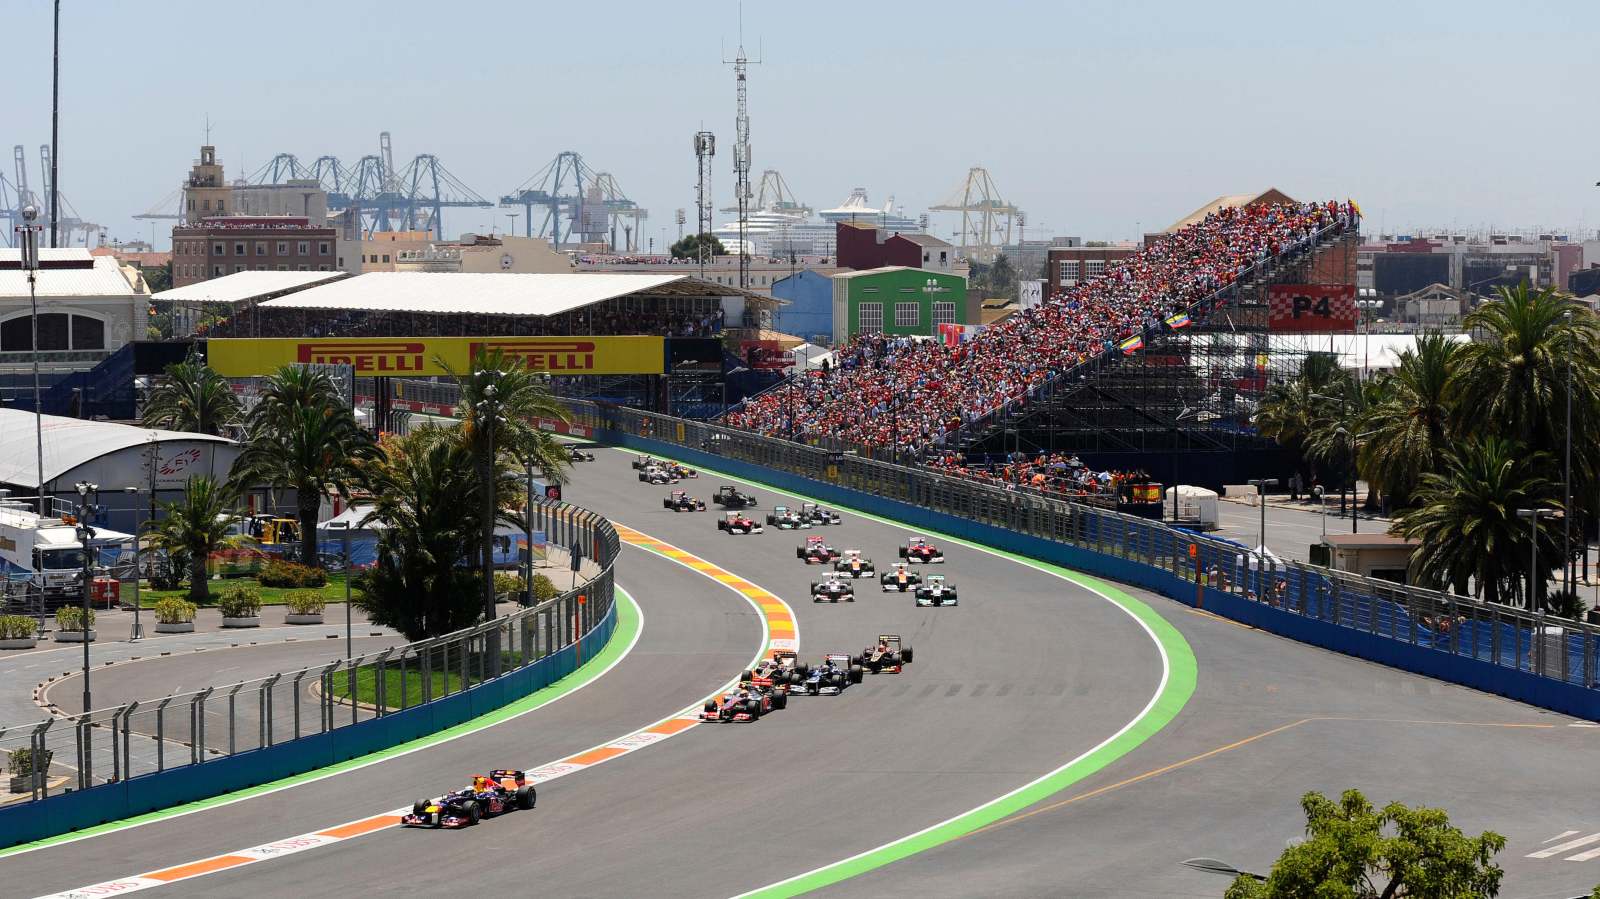 The start of the 2012 European Grand Prix, Valencia Street Circuit, 2012.